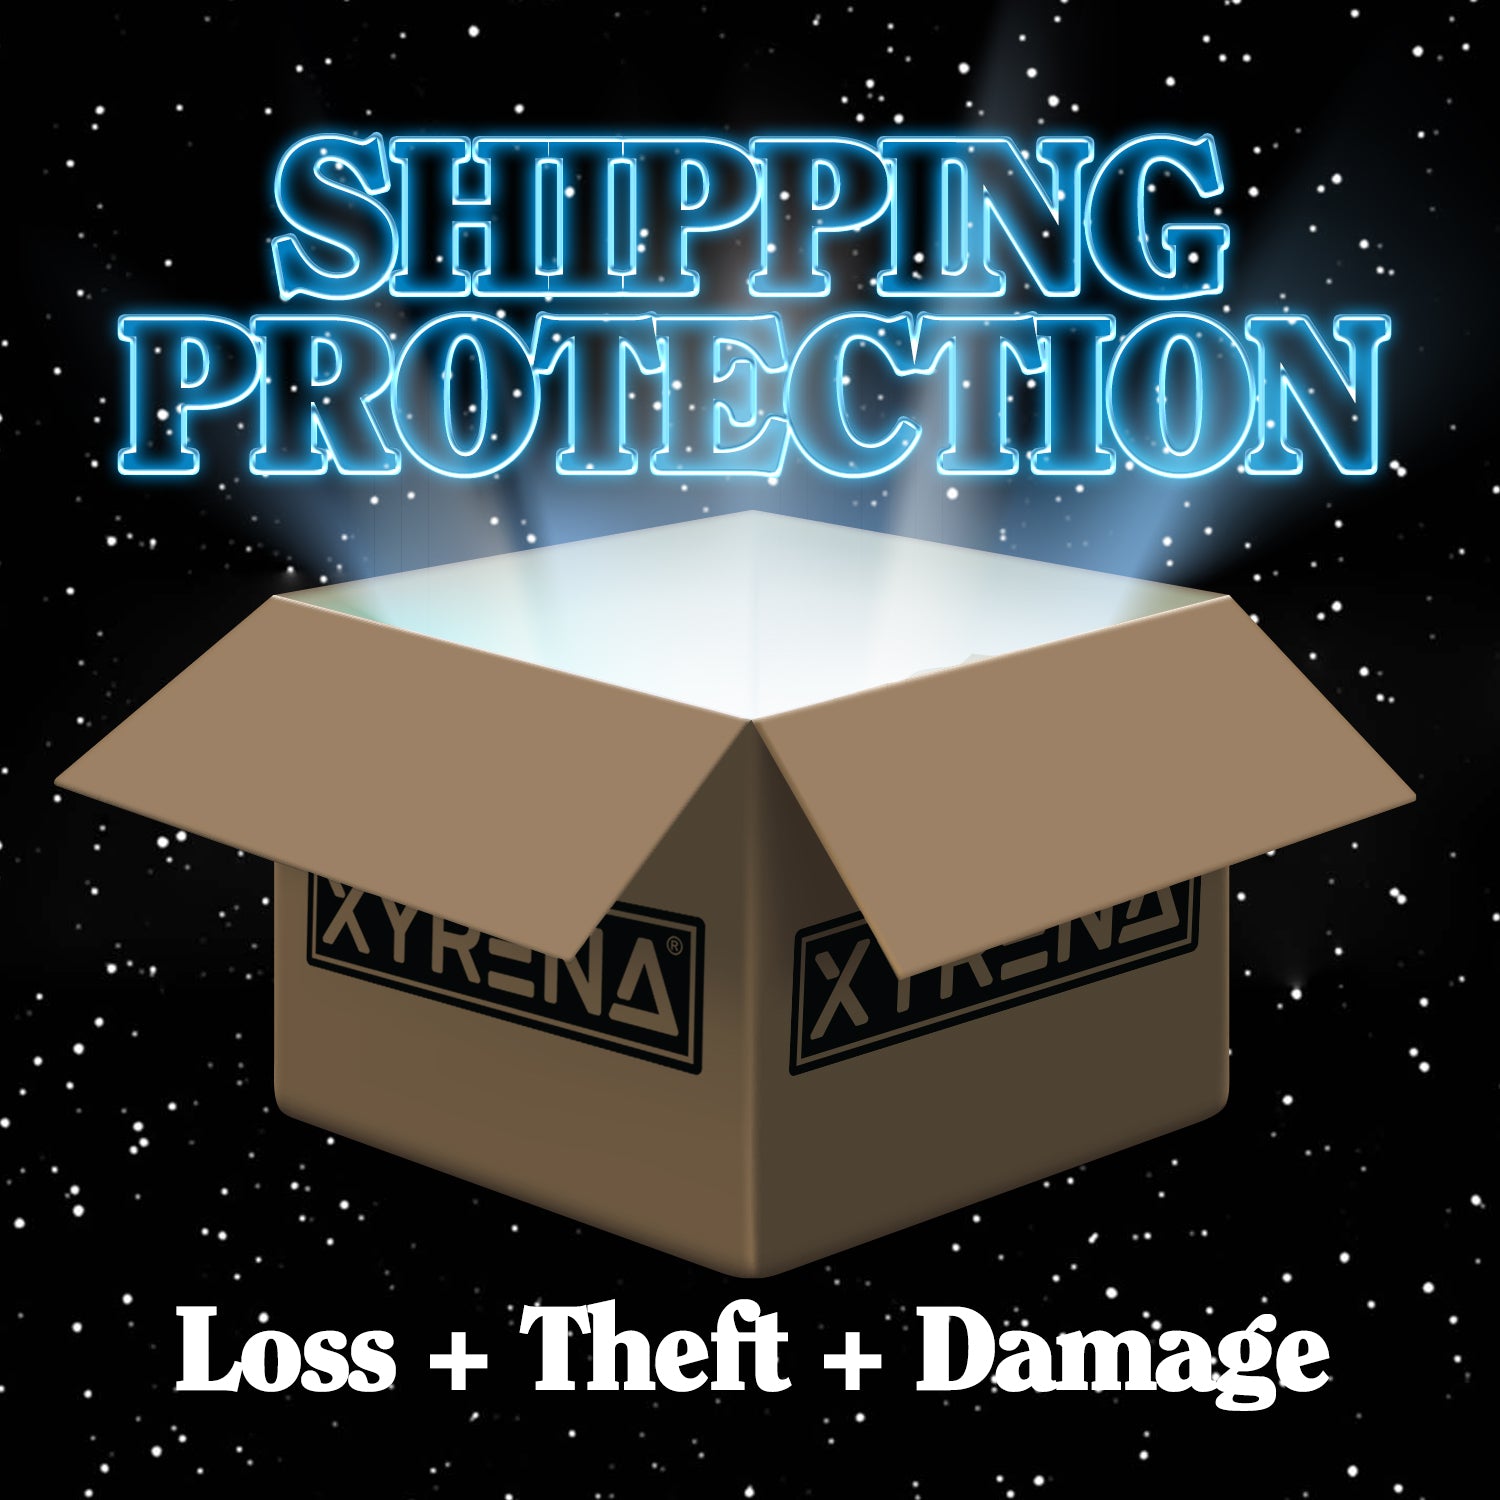 Xyrena Shipping Protection